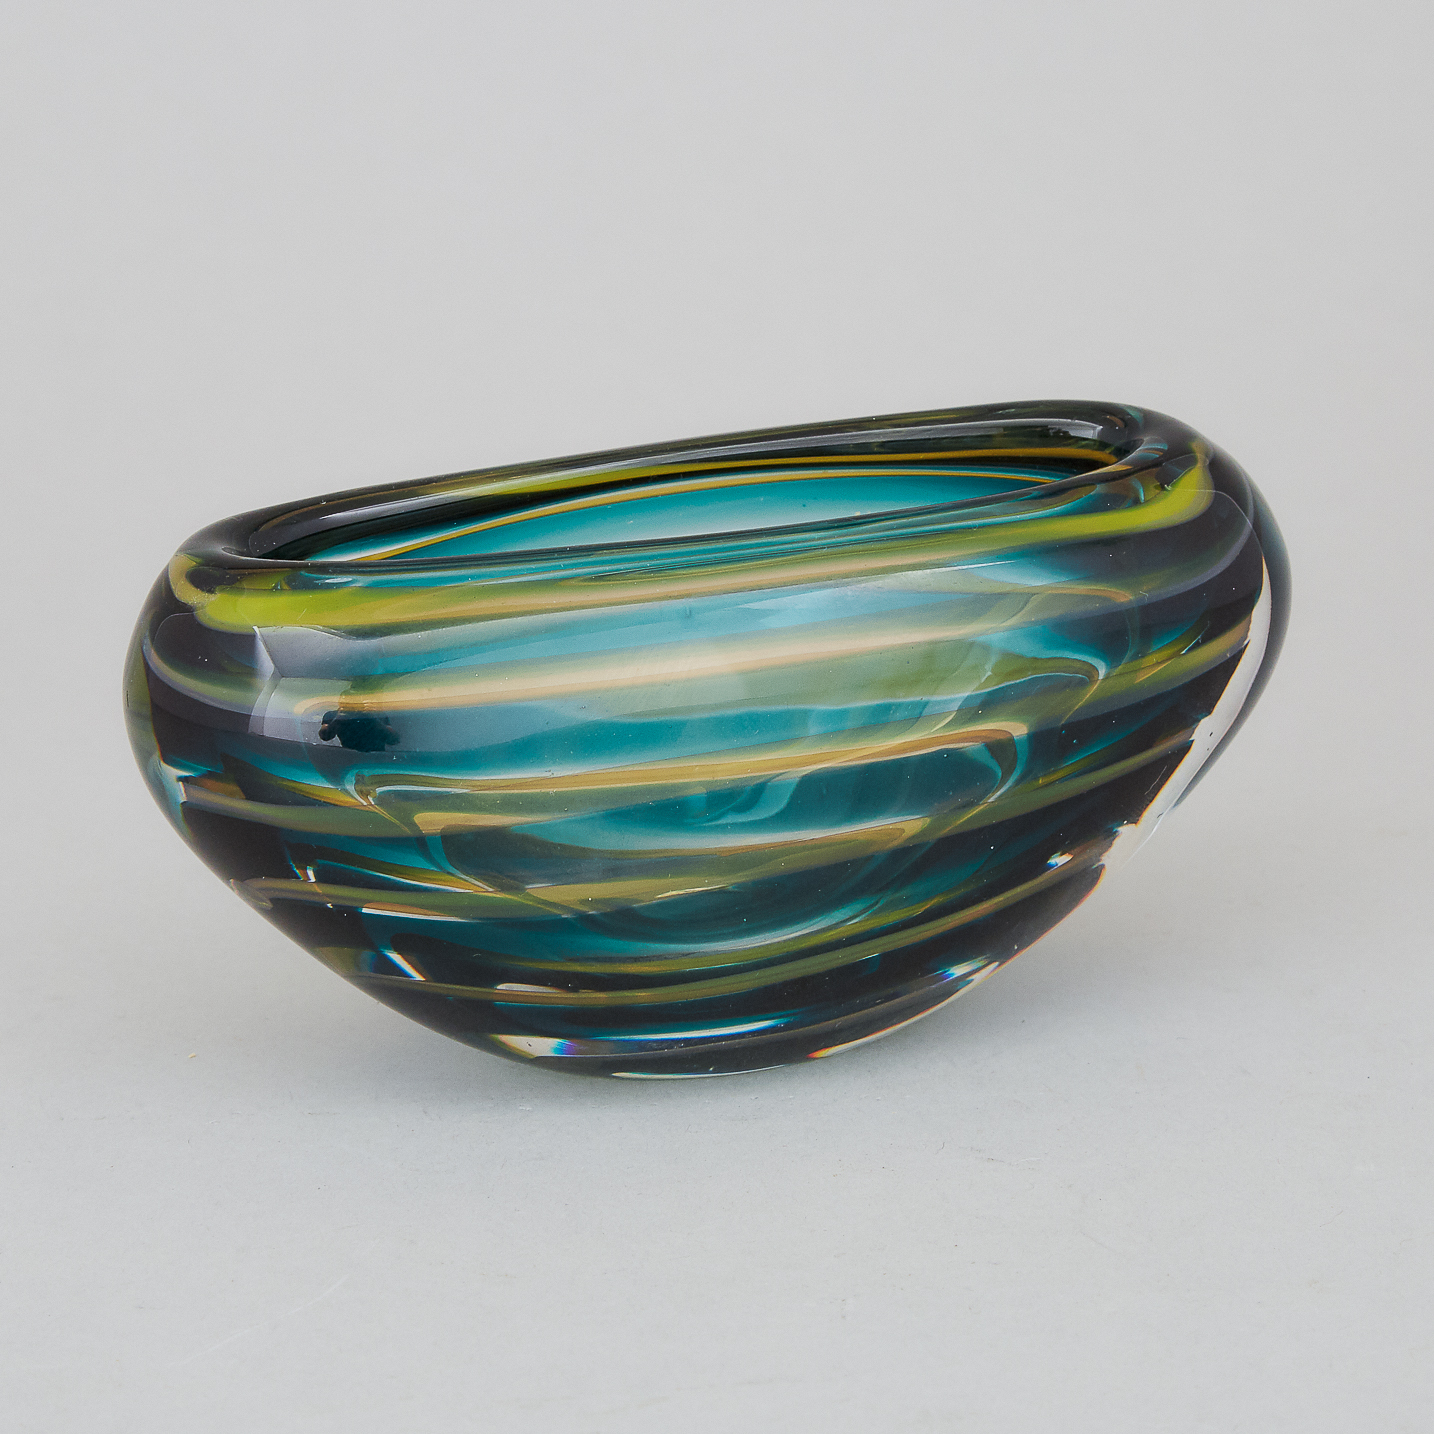 Leerdam ‘Unica’ Glass Small Vase, Floris Meydam, mid-20th century